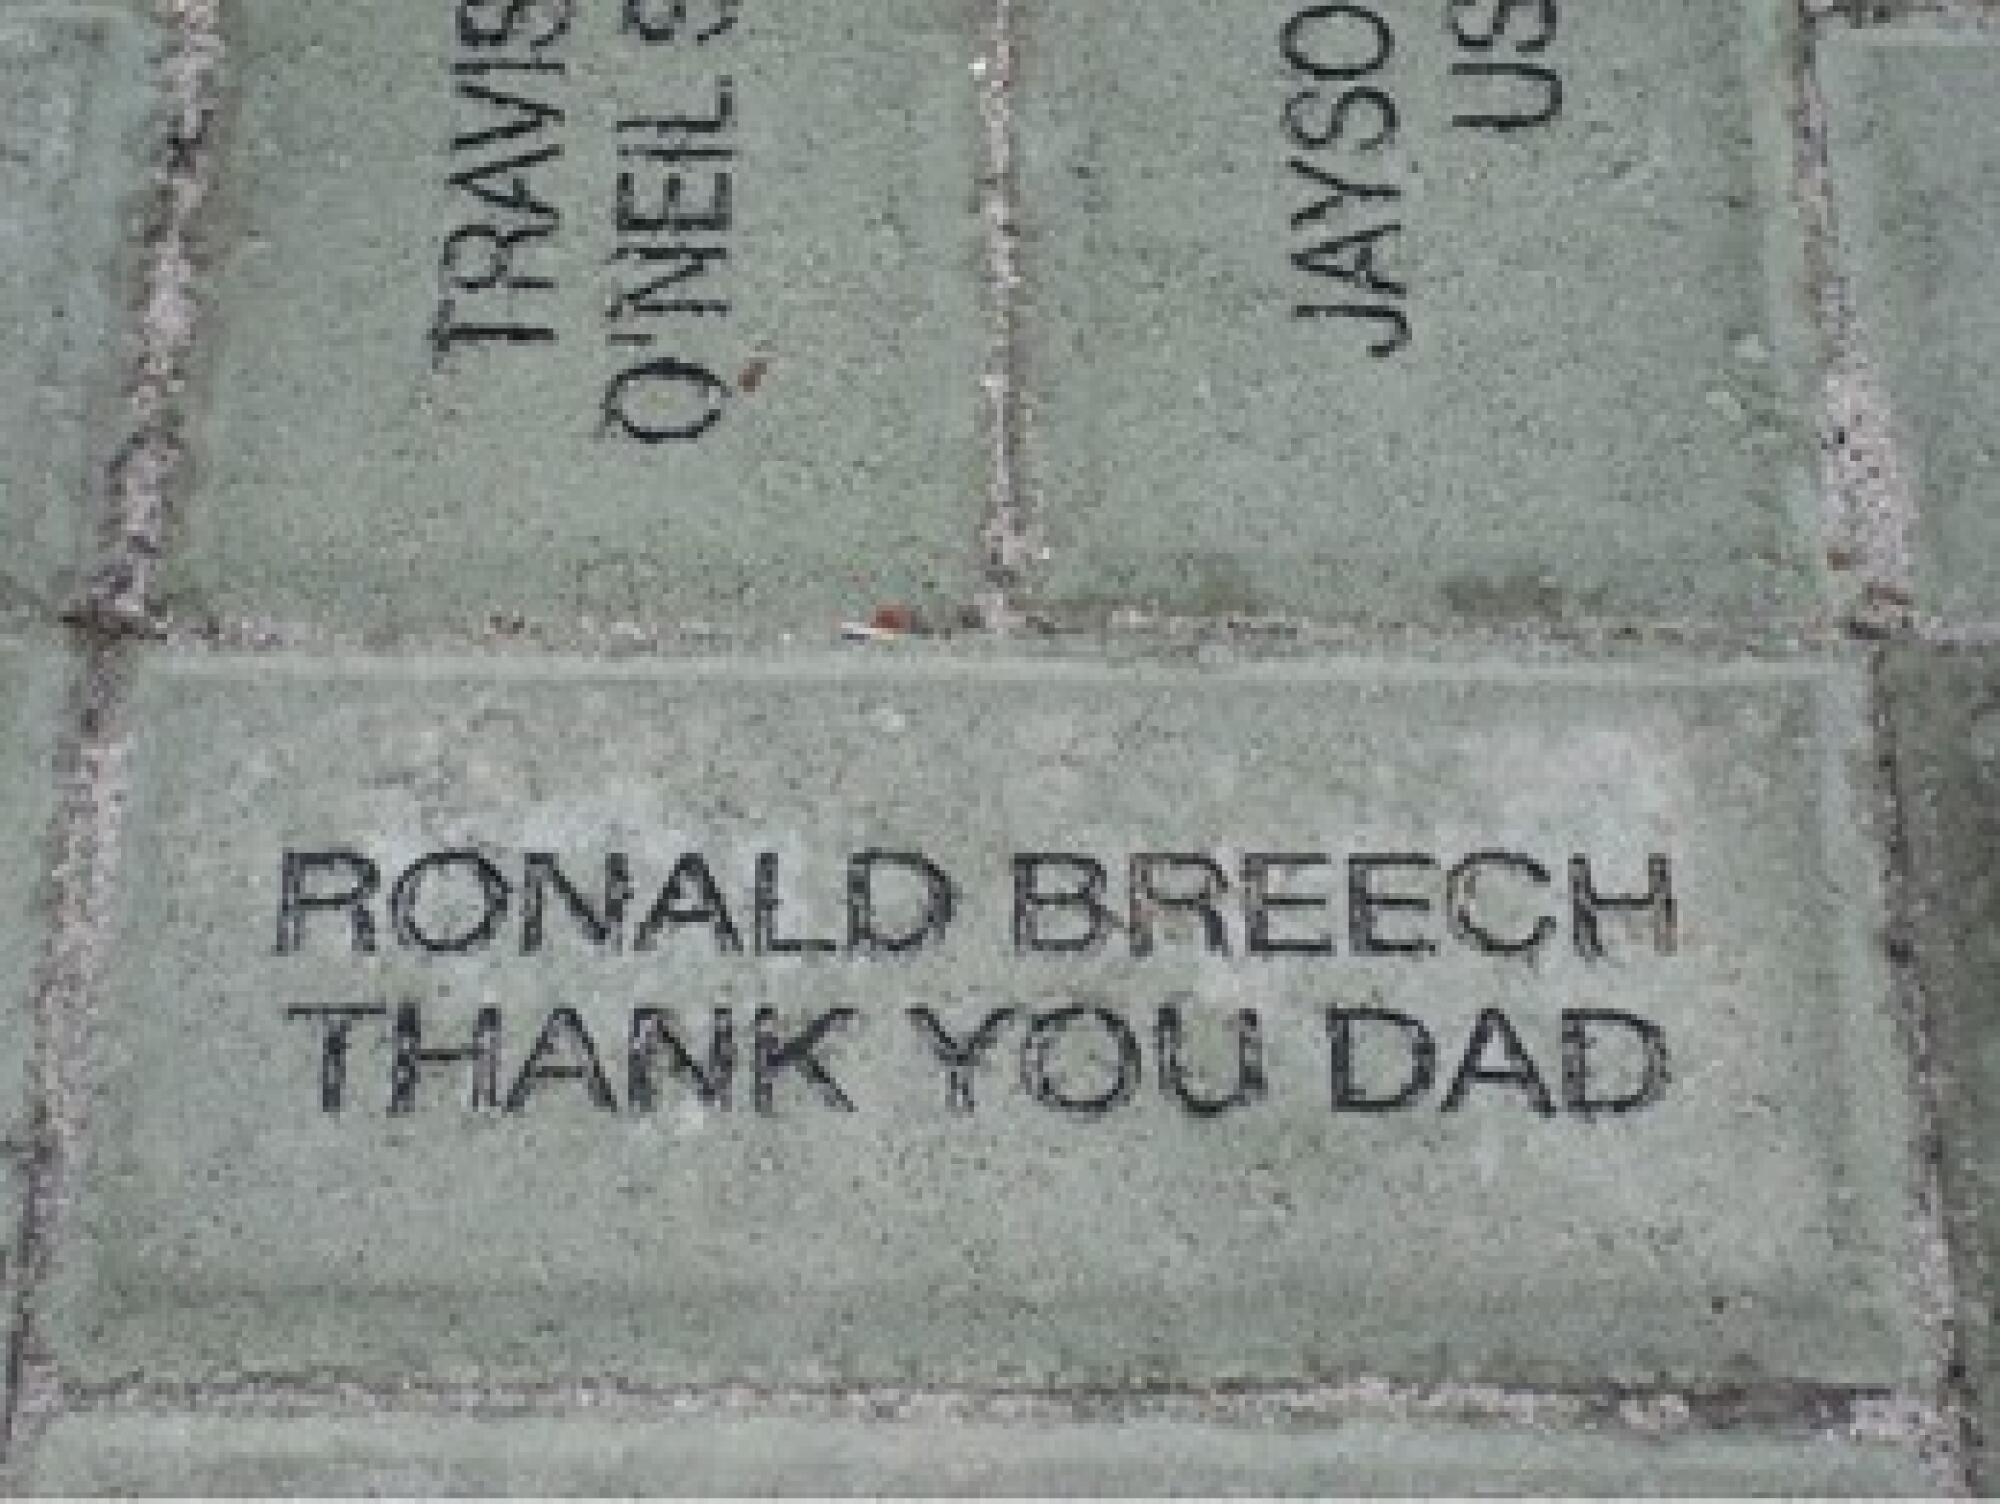 The late Ronald Breech’s brick.